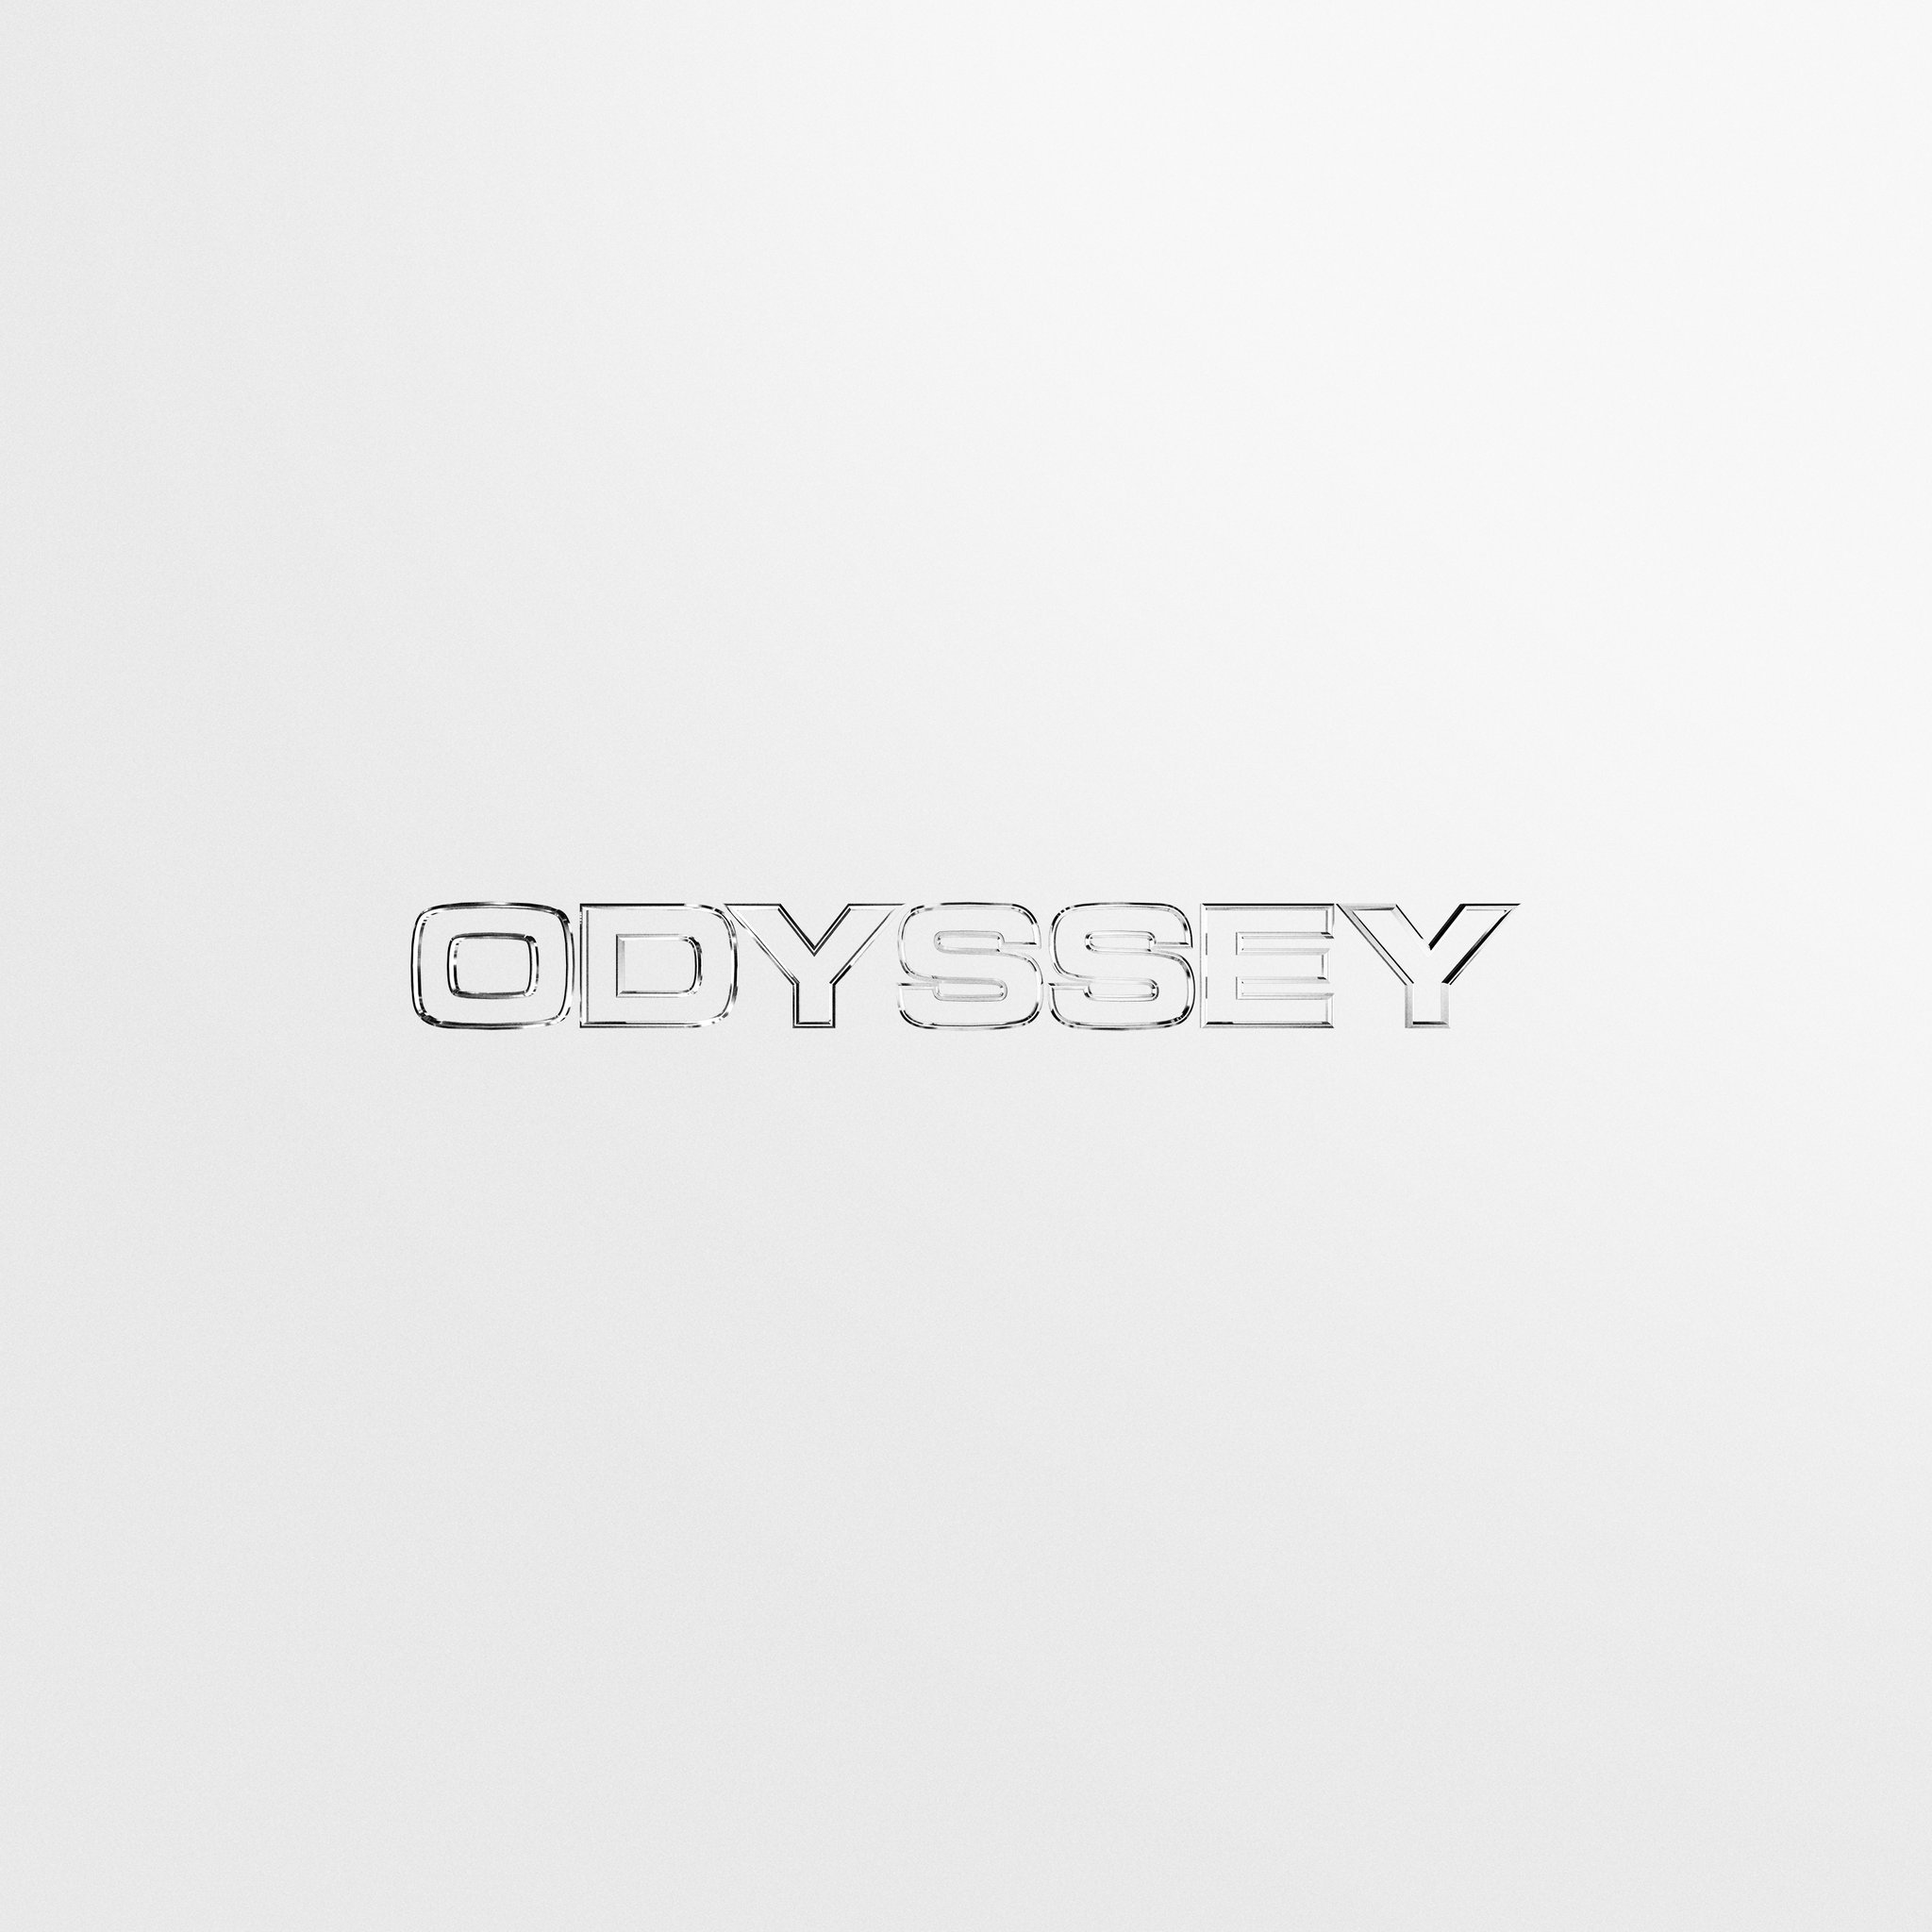 1991 Odyssey cover artwork